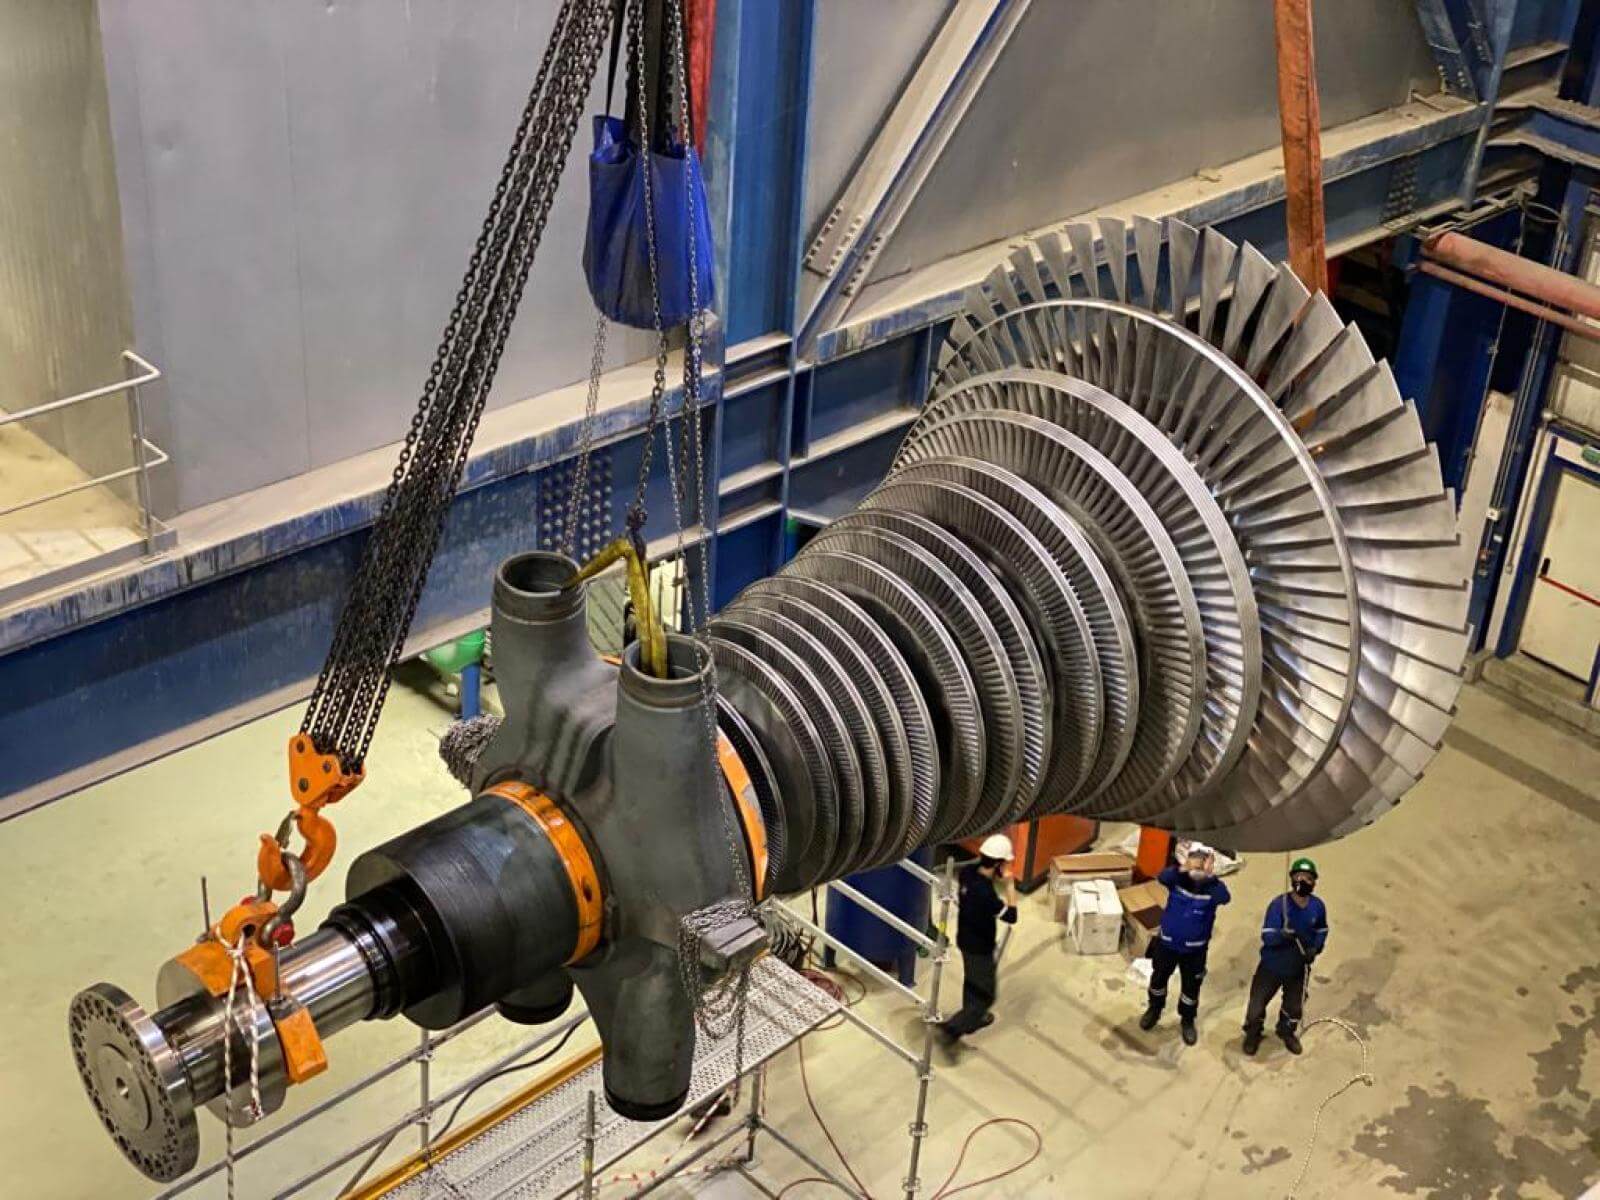 Tufanbeyli Thermal Power Plant - 157 MW Siemens Steam Turbine Major Maintenance (STG-2)